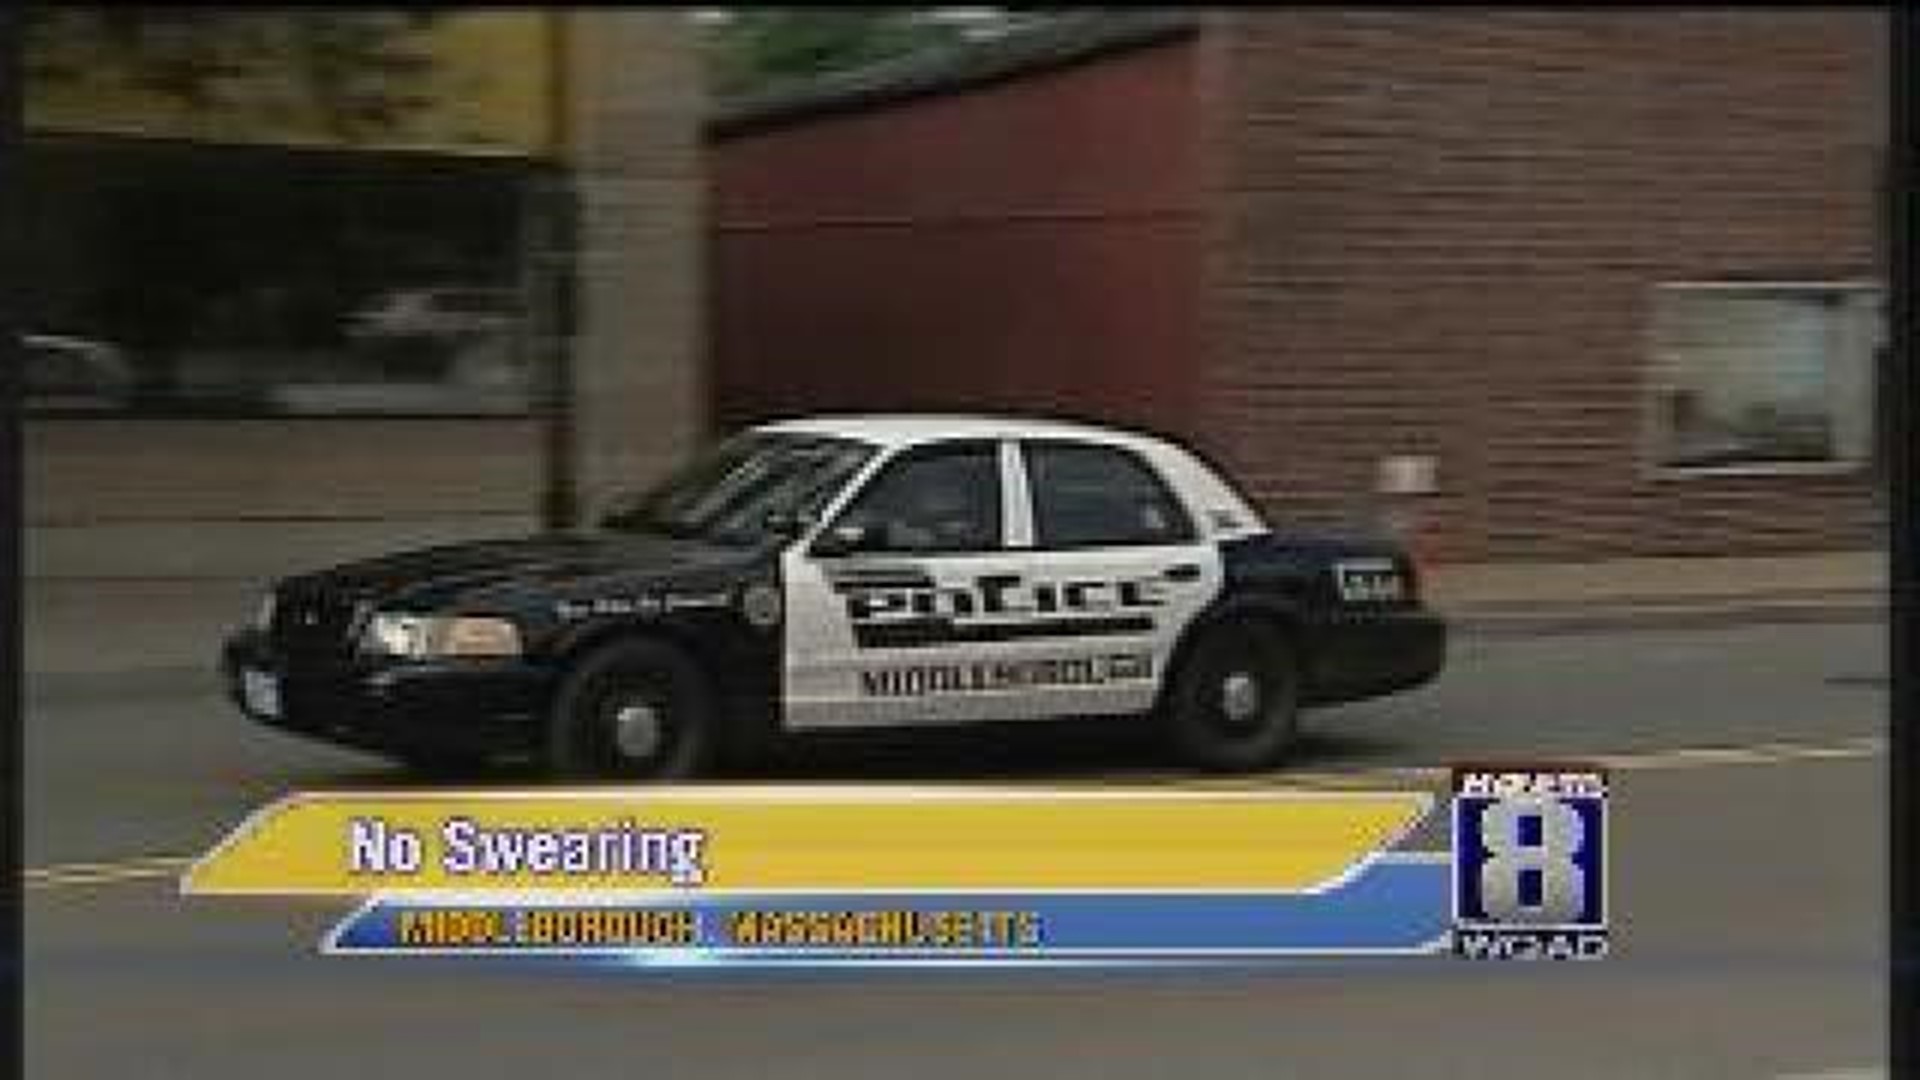 Town enforces a no swearing rule